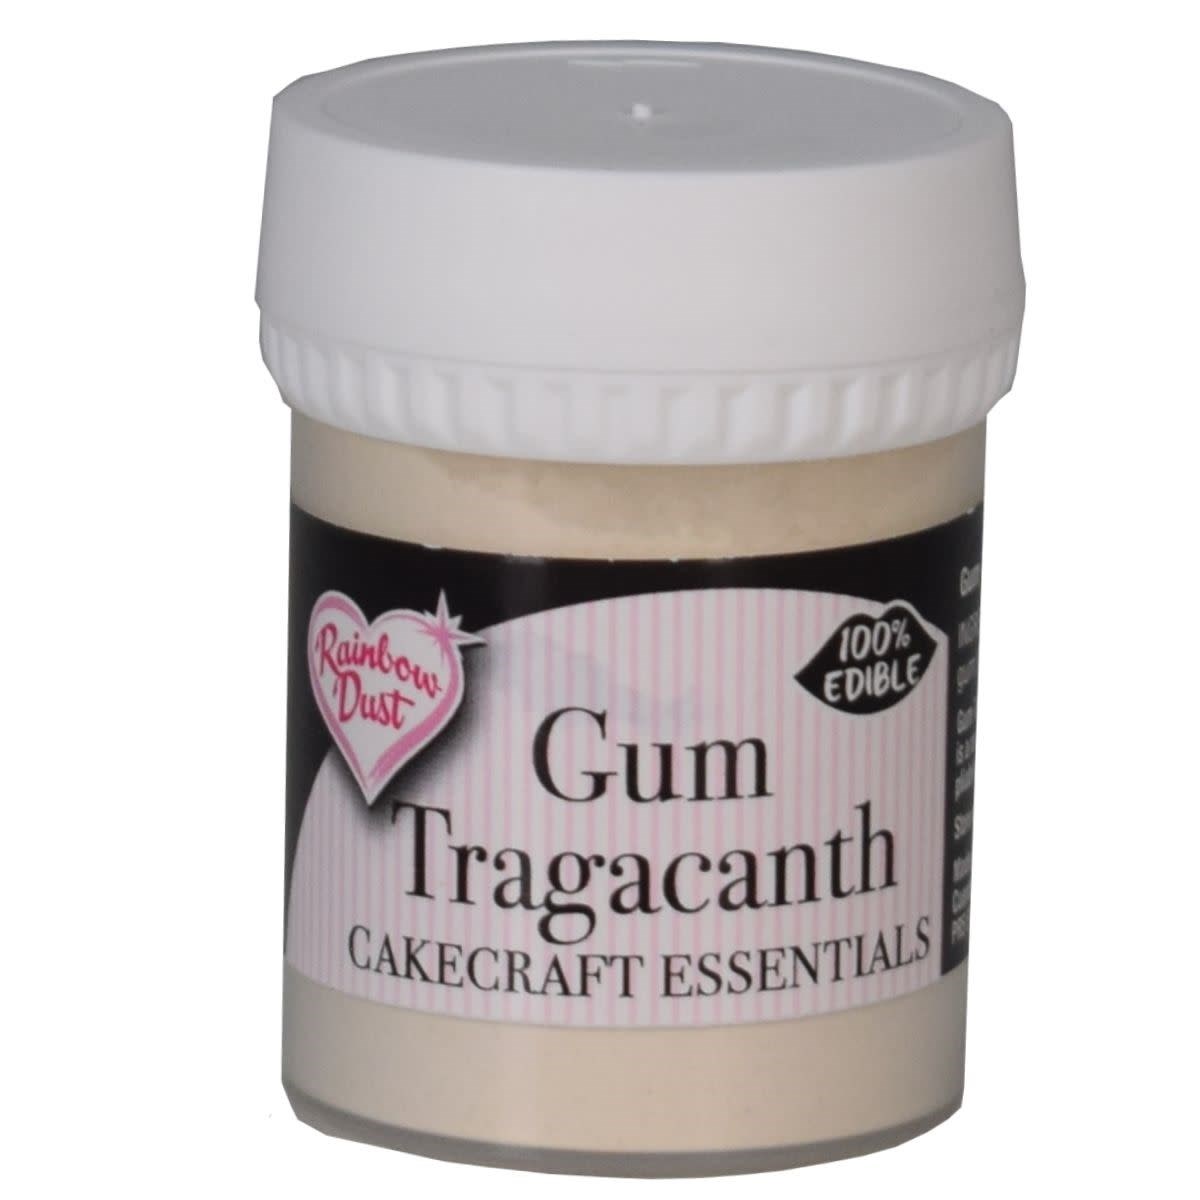 Gum Tragacanth